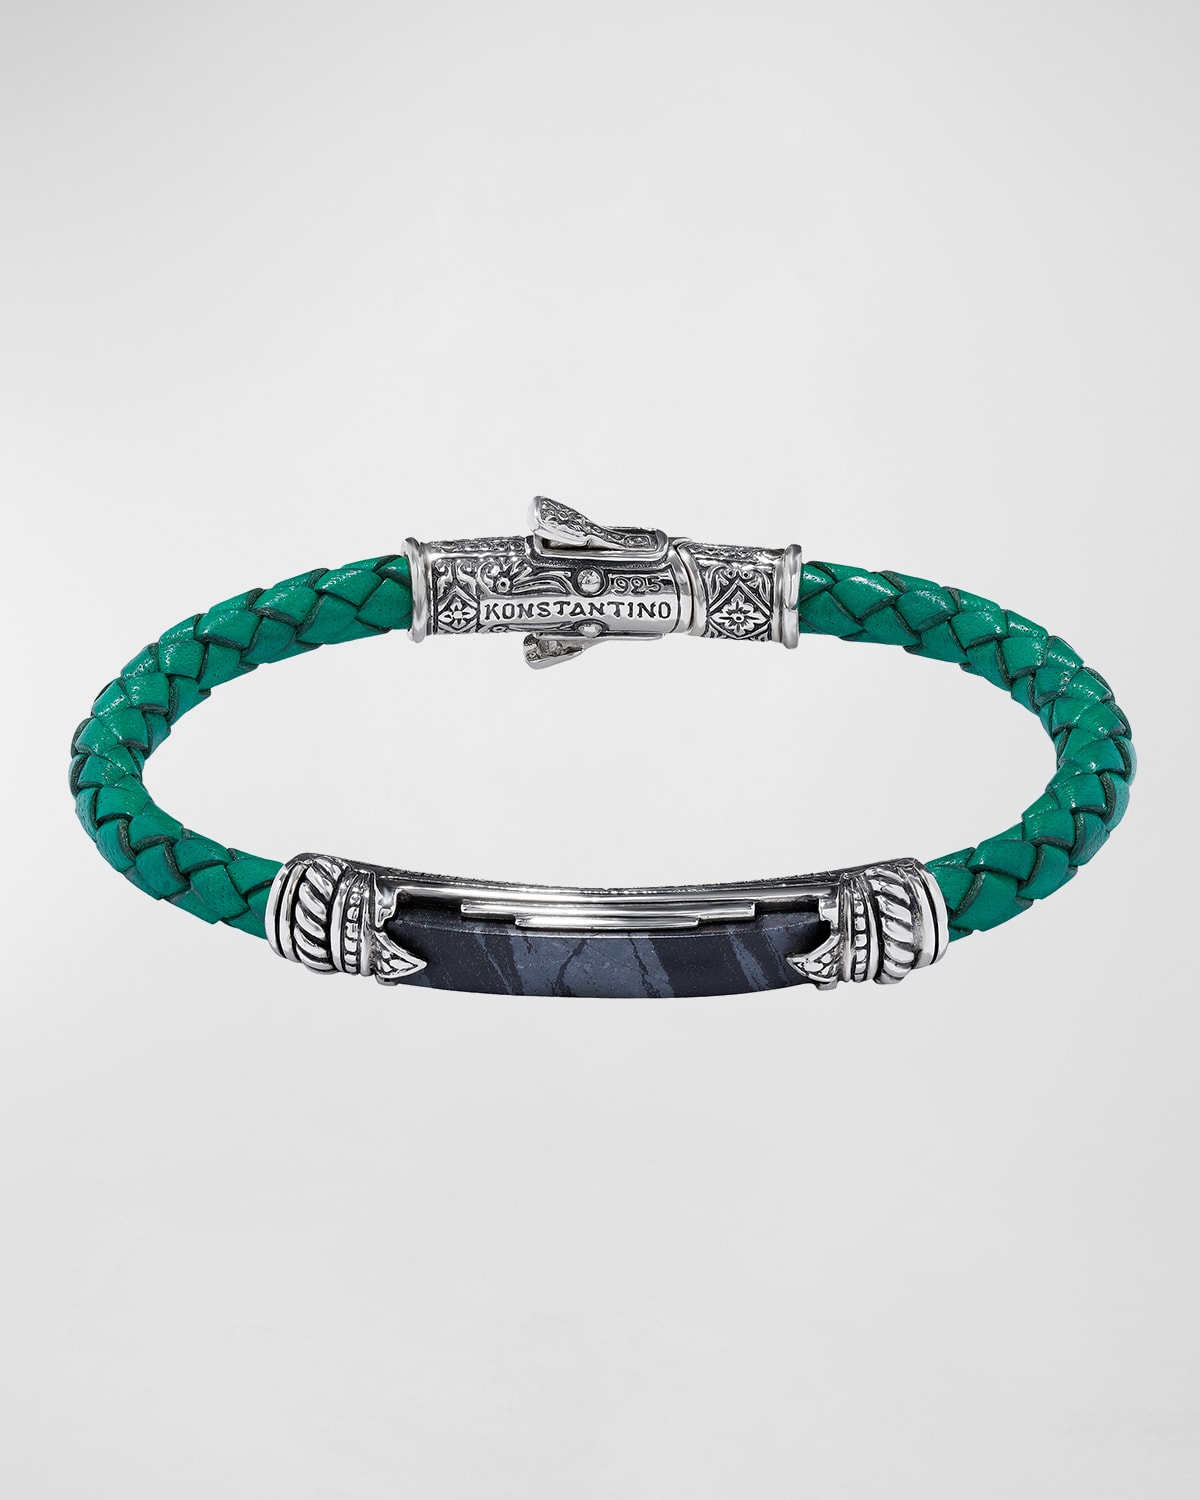 Konstantino Men's Braided Leather Stone Bracelet W/ Sterling Silver In Green